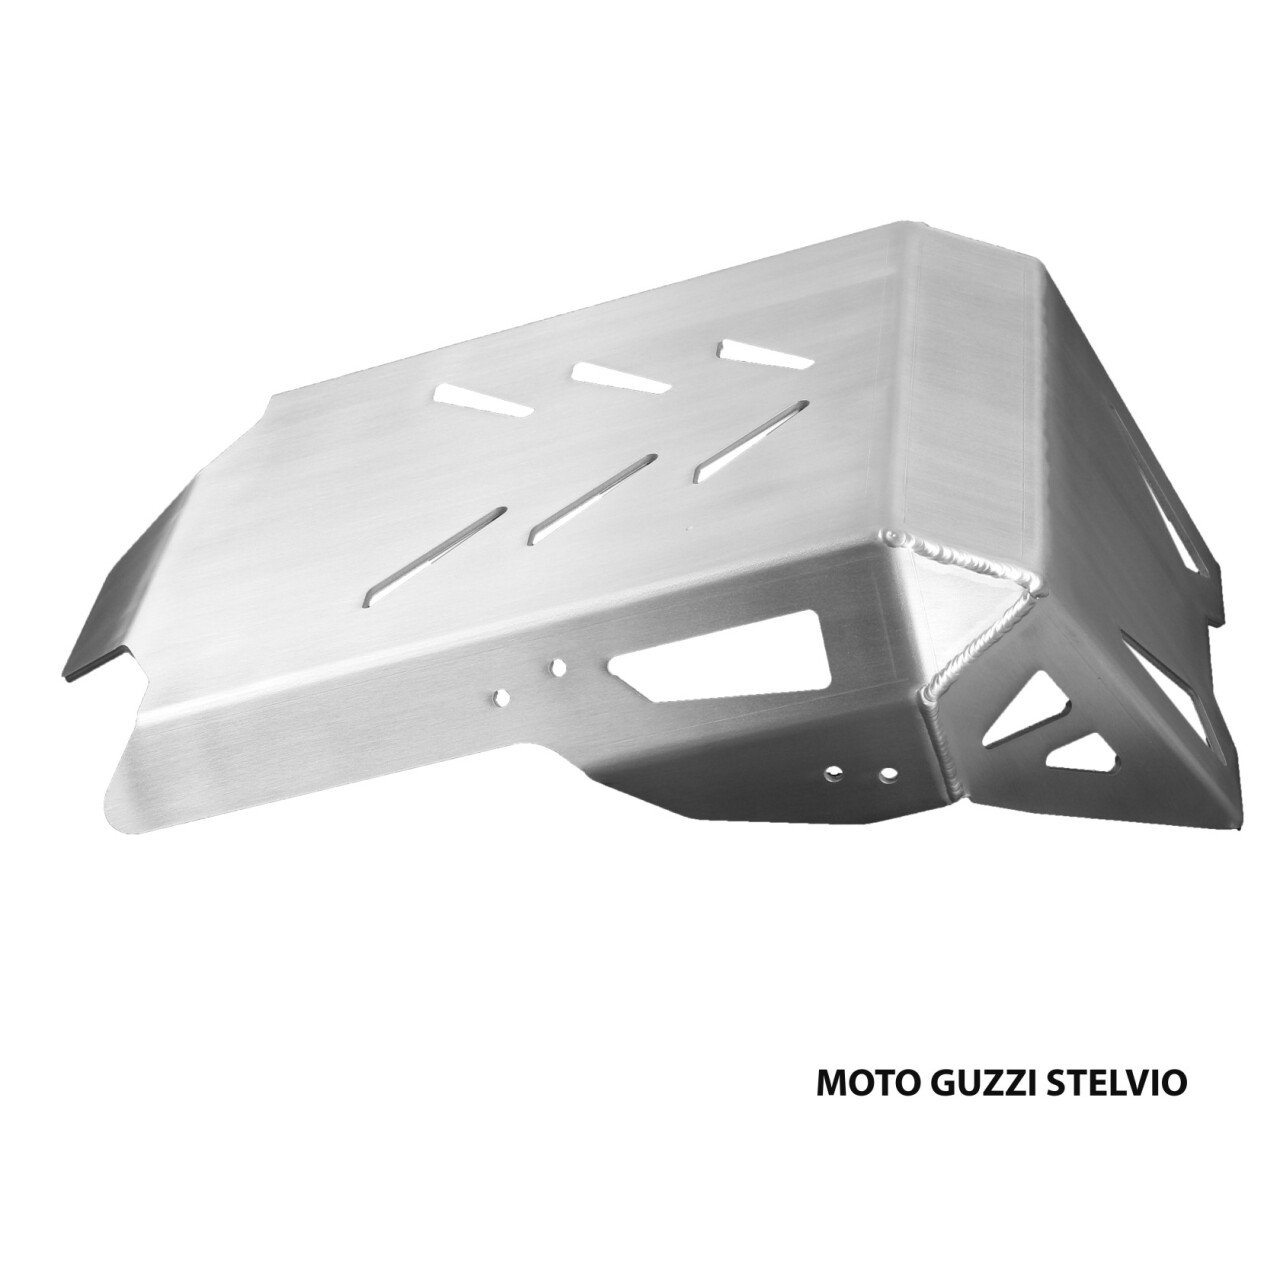 Engine protection Skid plate -Moto Guzzi Stelvio